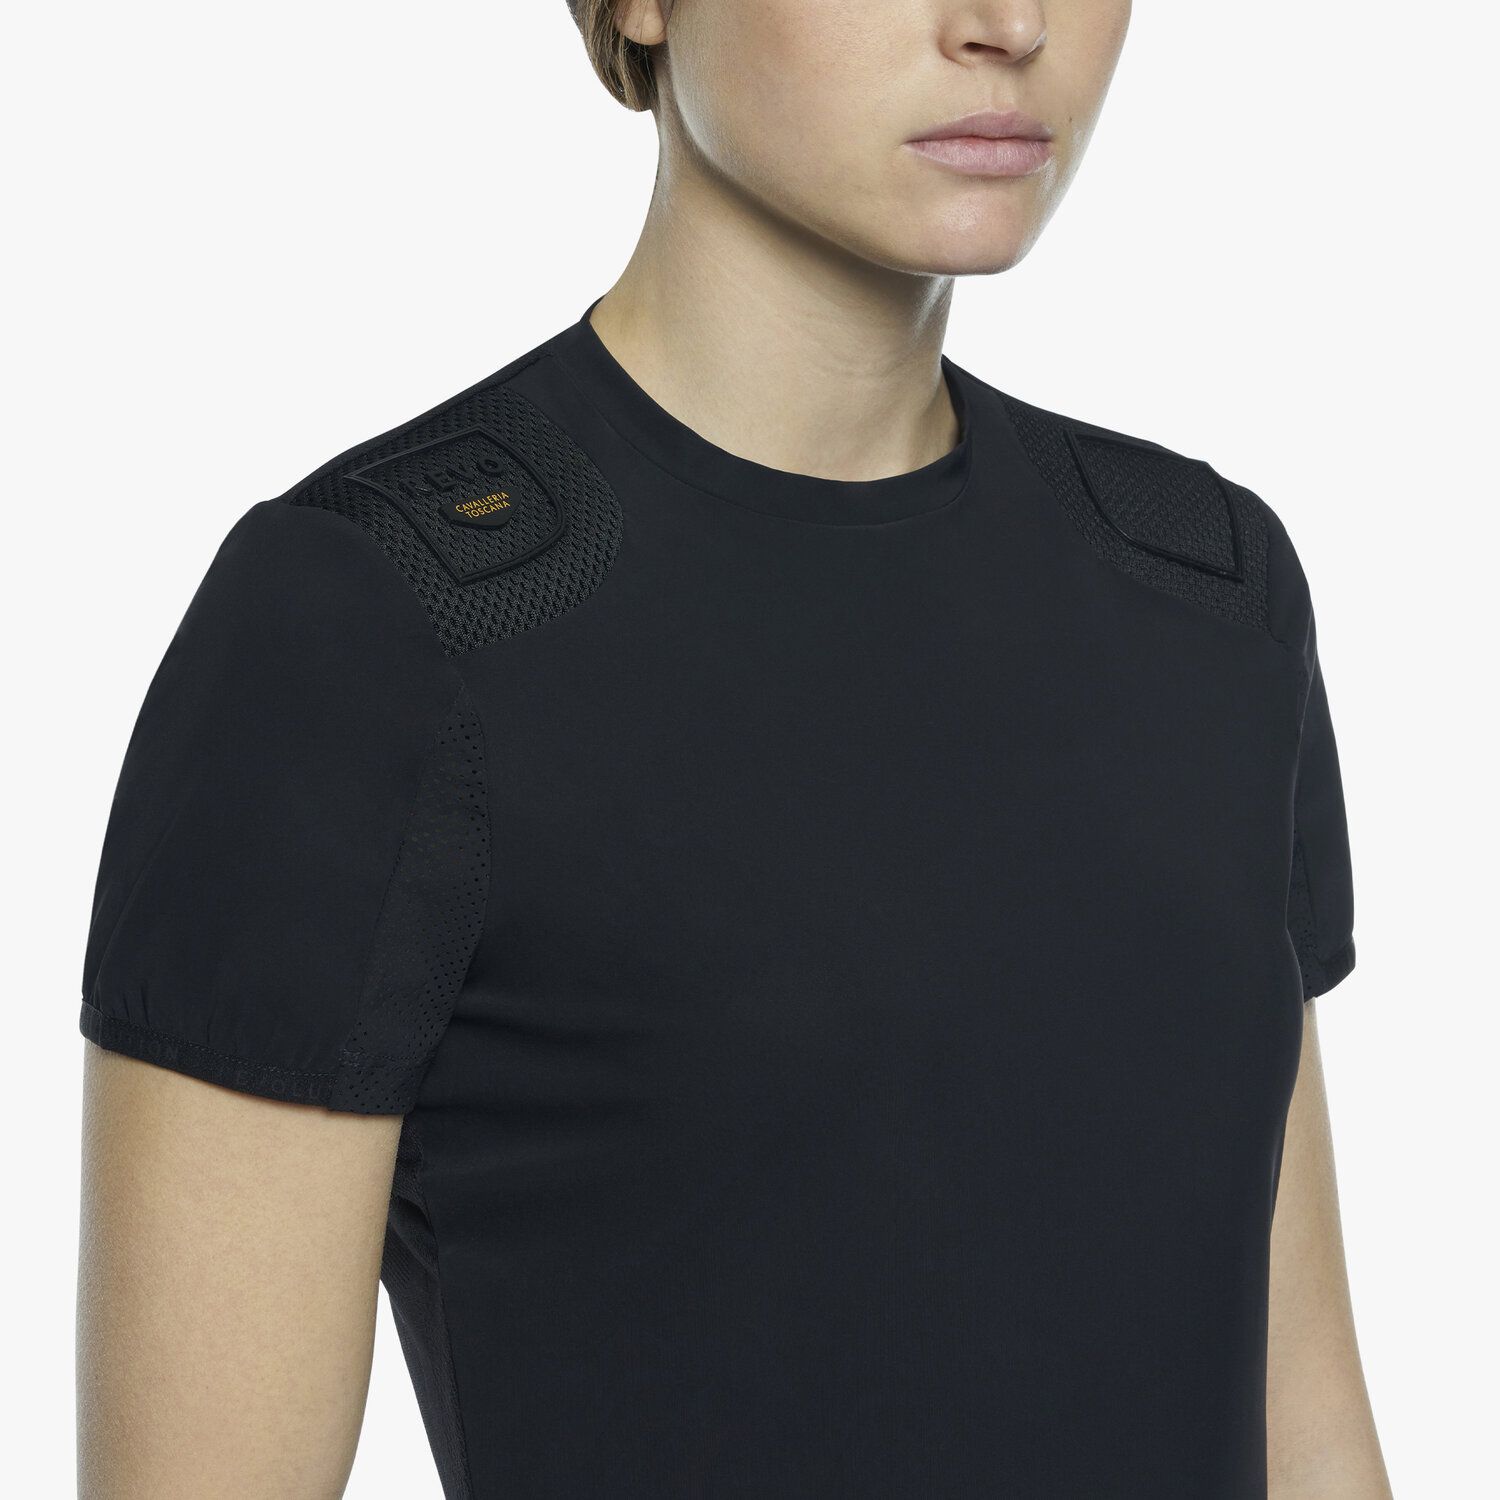 Cavalleria Toscana Women's R-Evo Epaulet T-Shirt BLACK-4